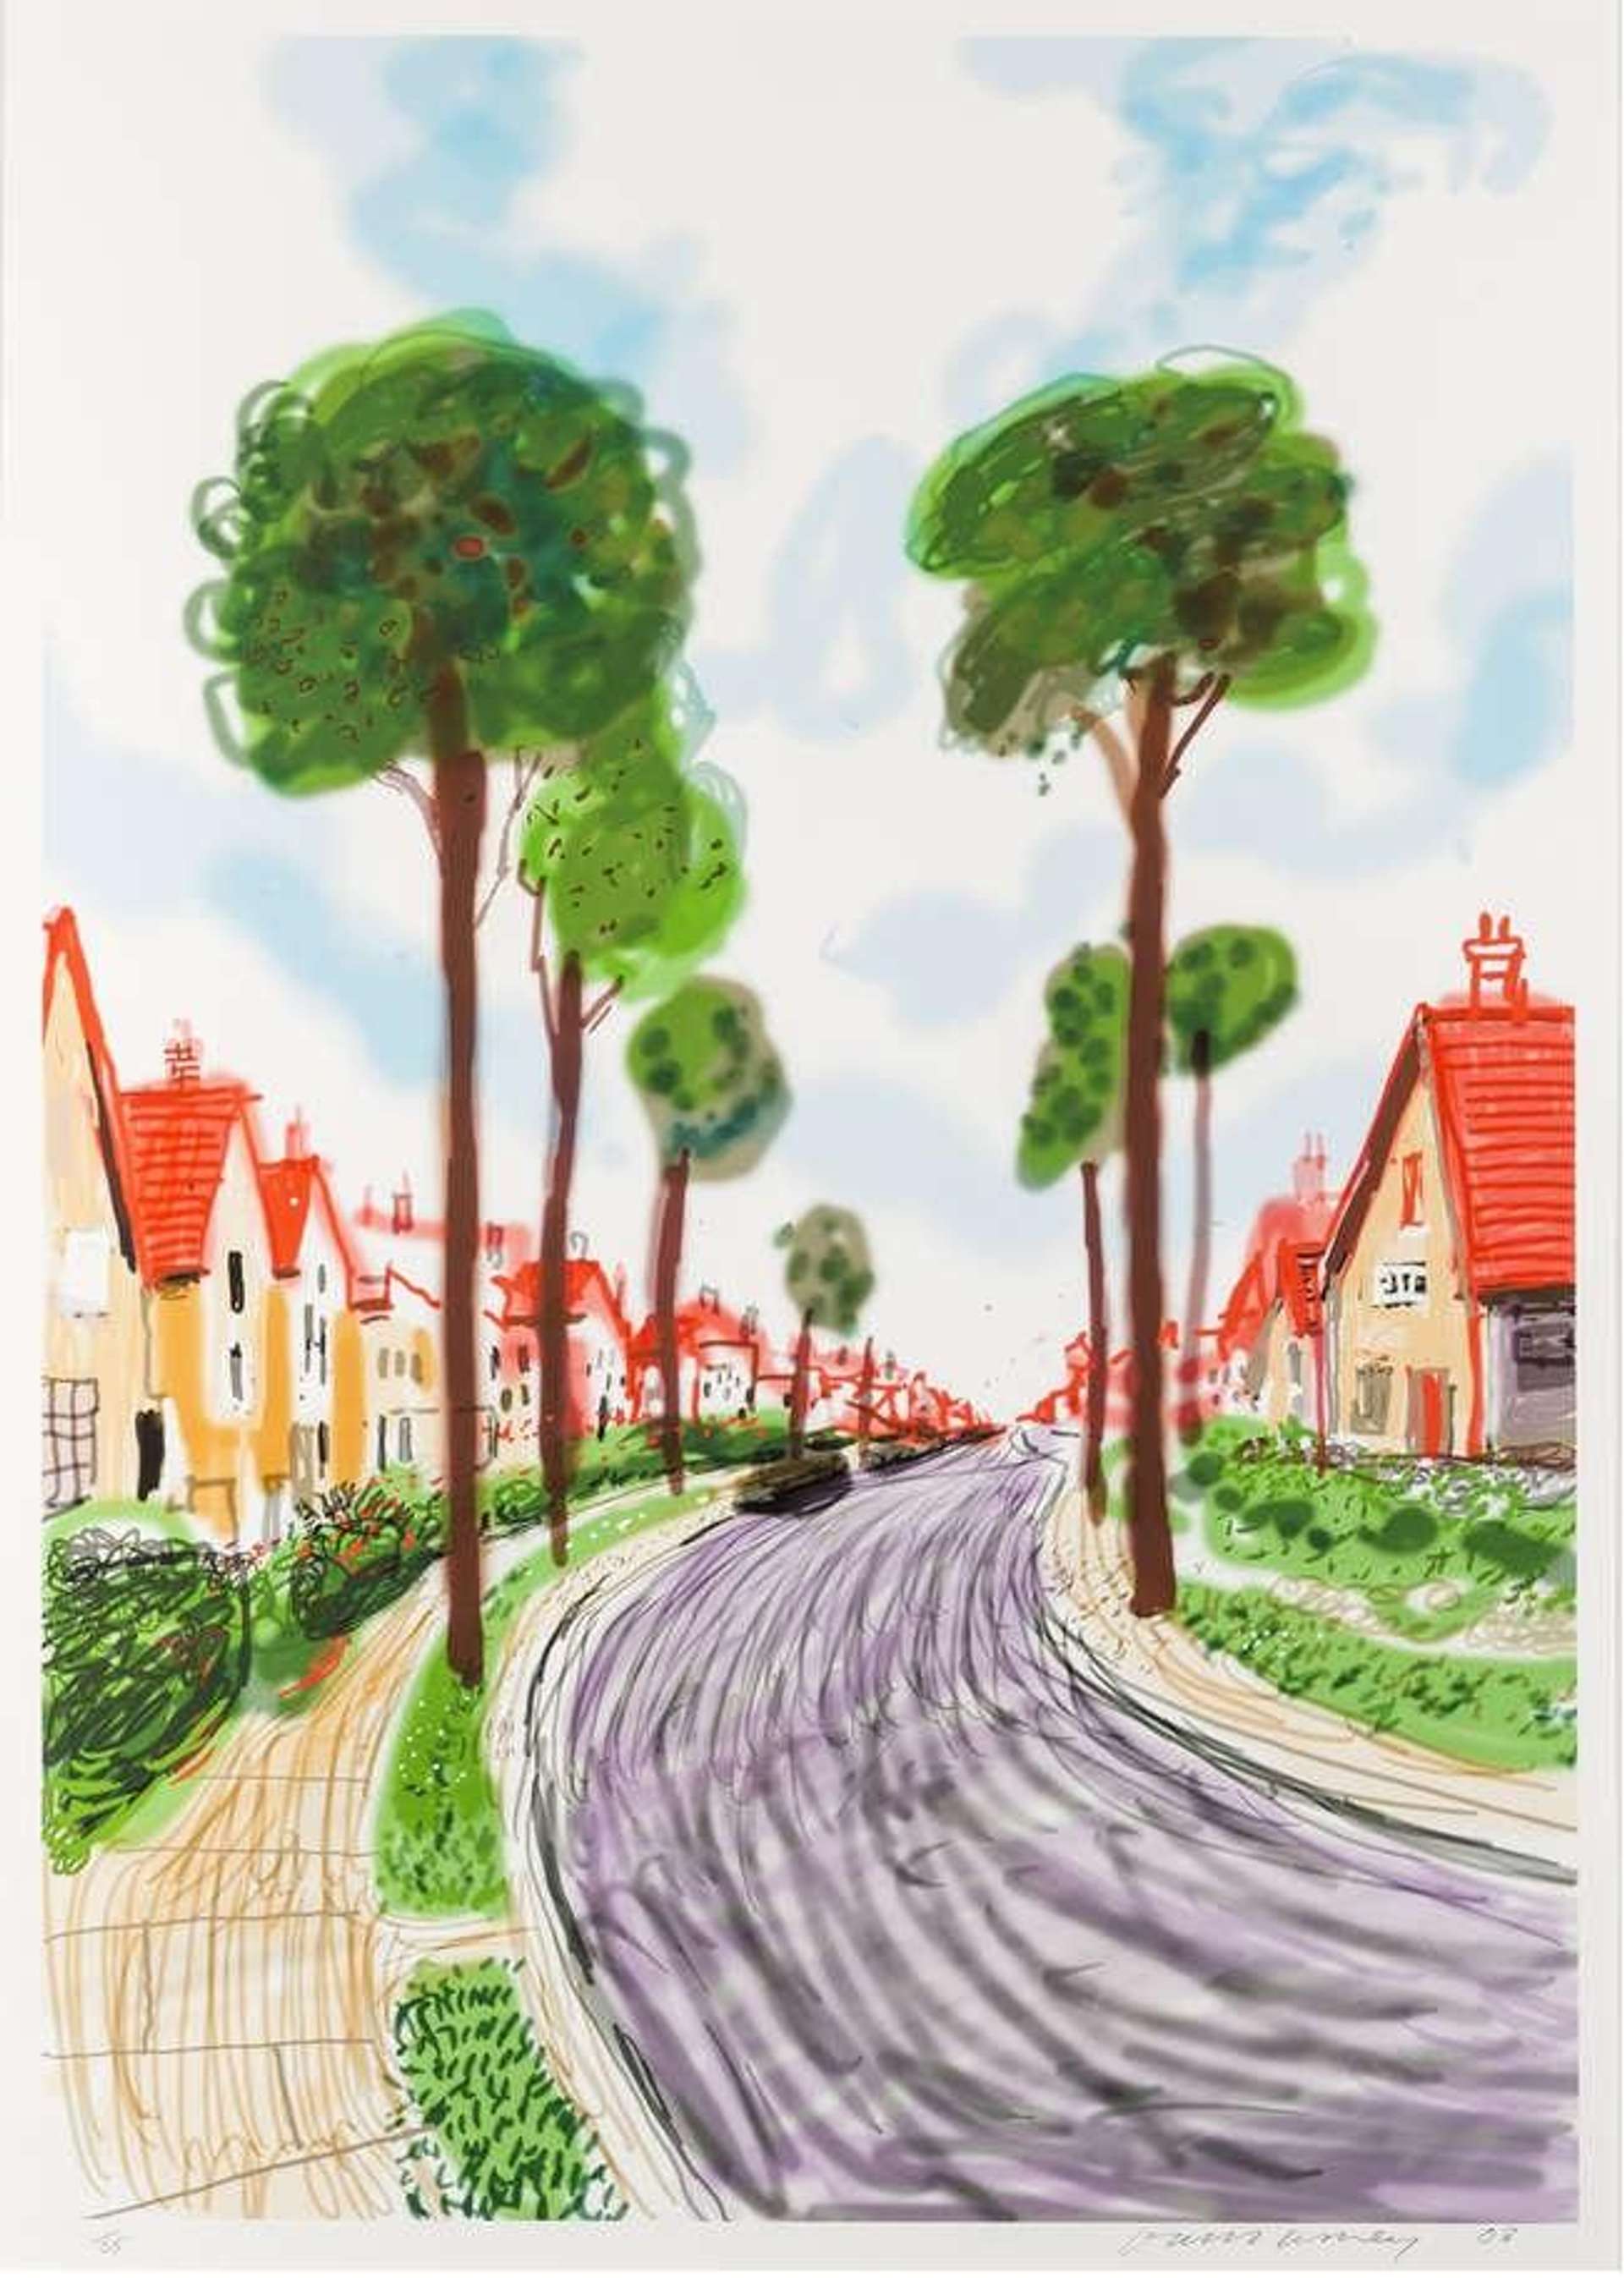 Cardigan Road by David Hockney